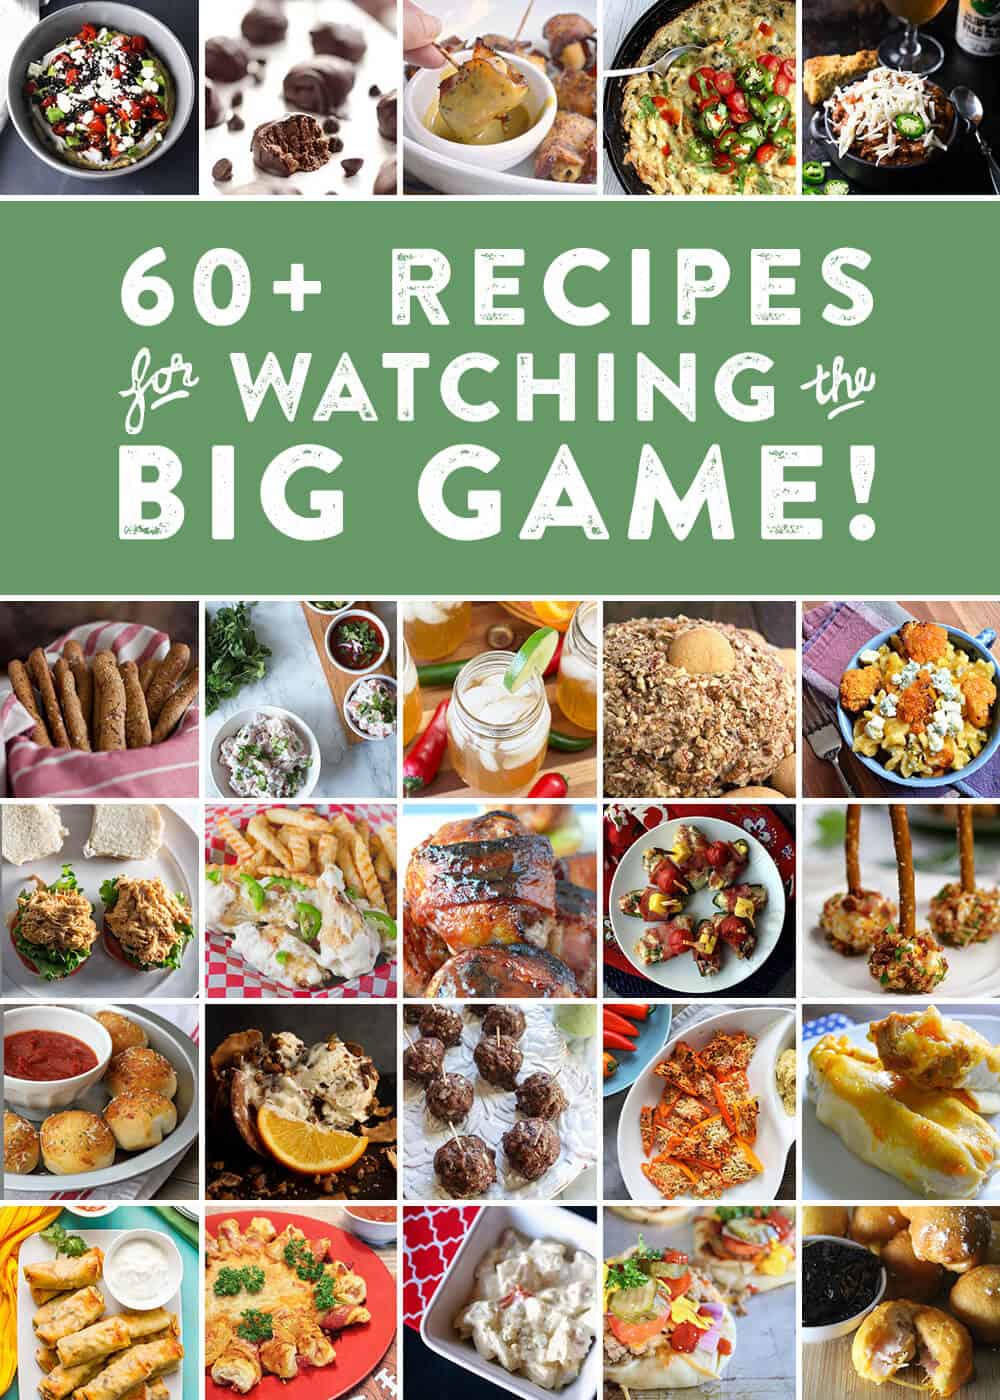 Big Game recipes graphic